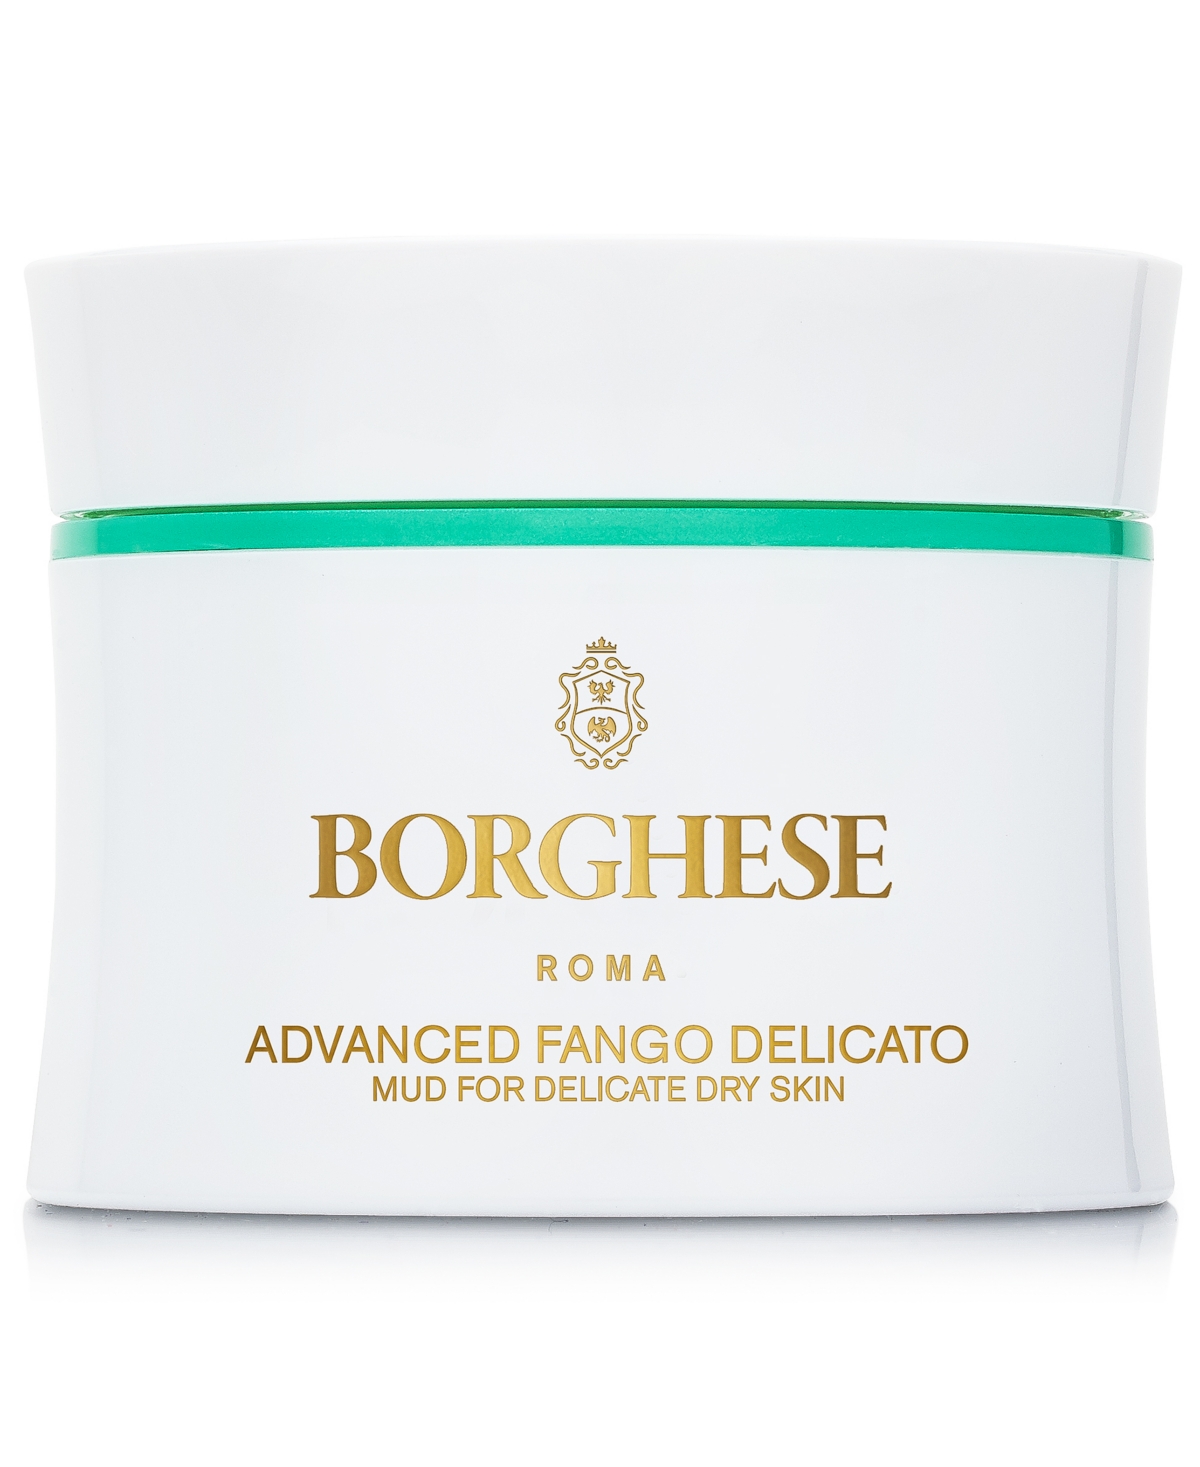 Borghese Advanced Fango Delicato Moisturizing Mud Mask, 2.7-oz.